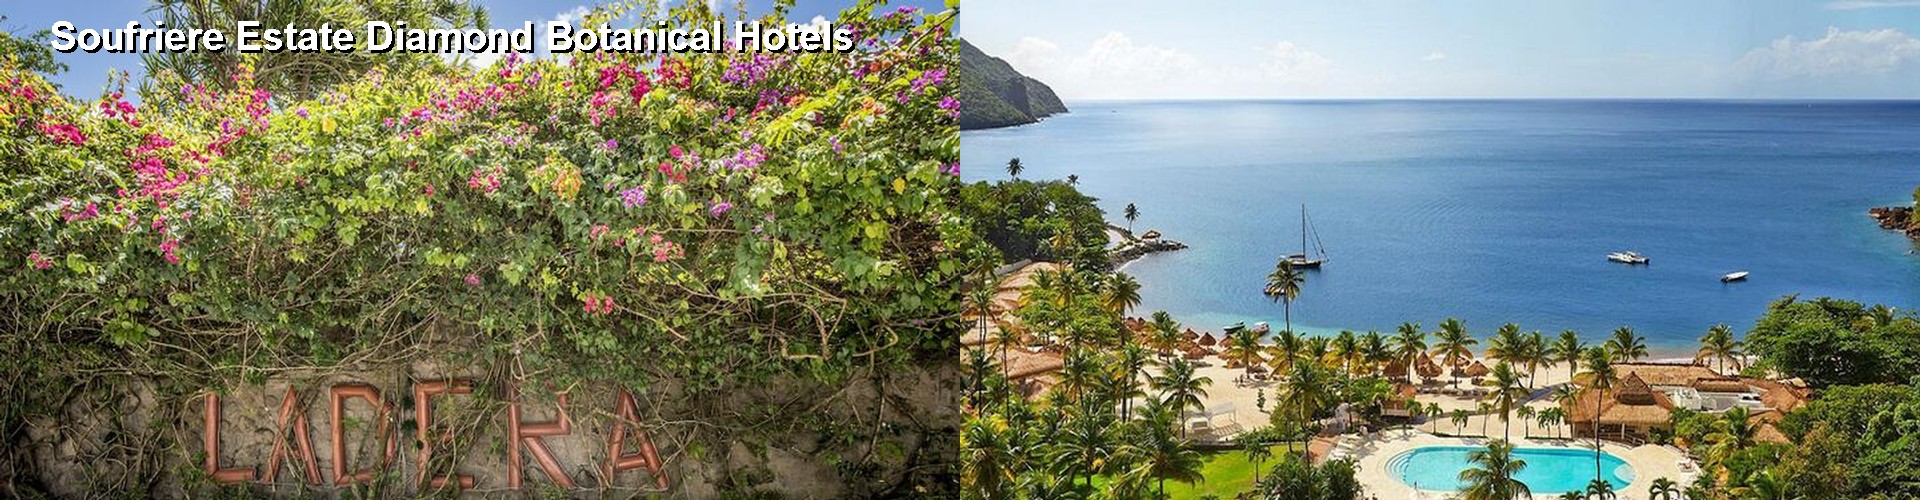 5 Best Hotels near Soufriere Estate Diamond Botanical